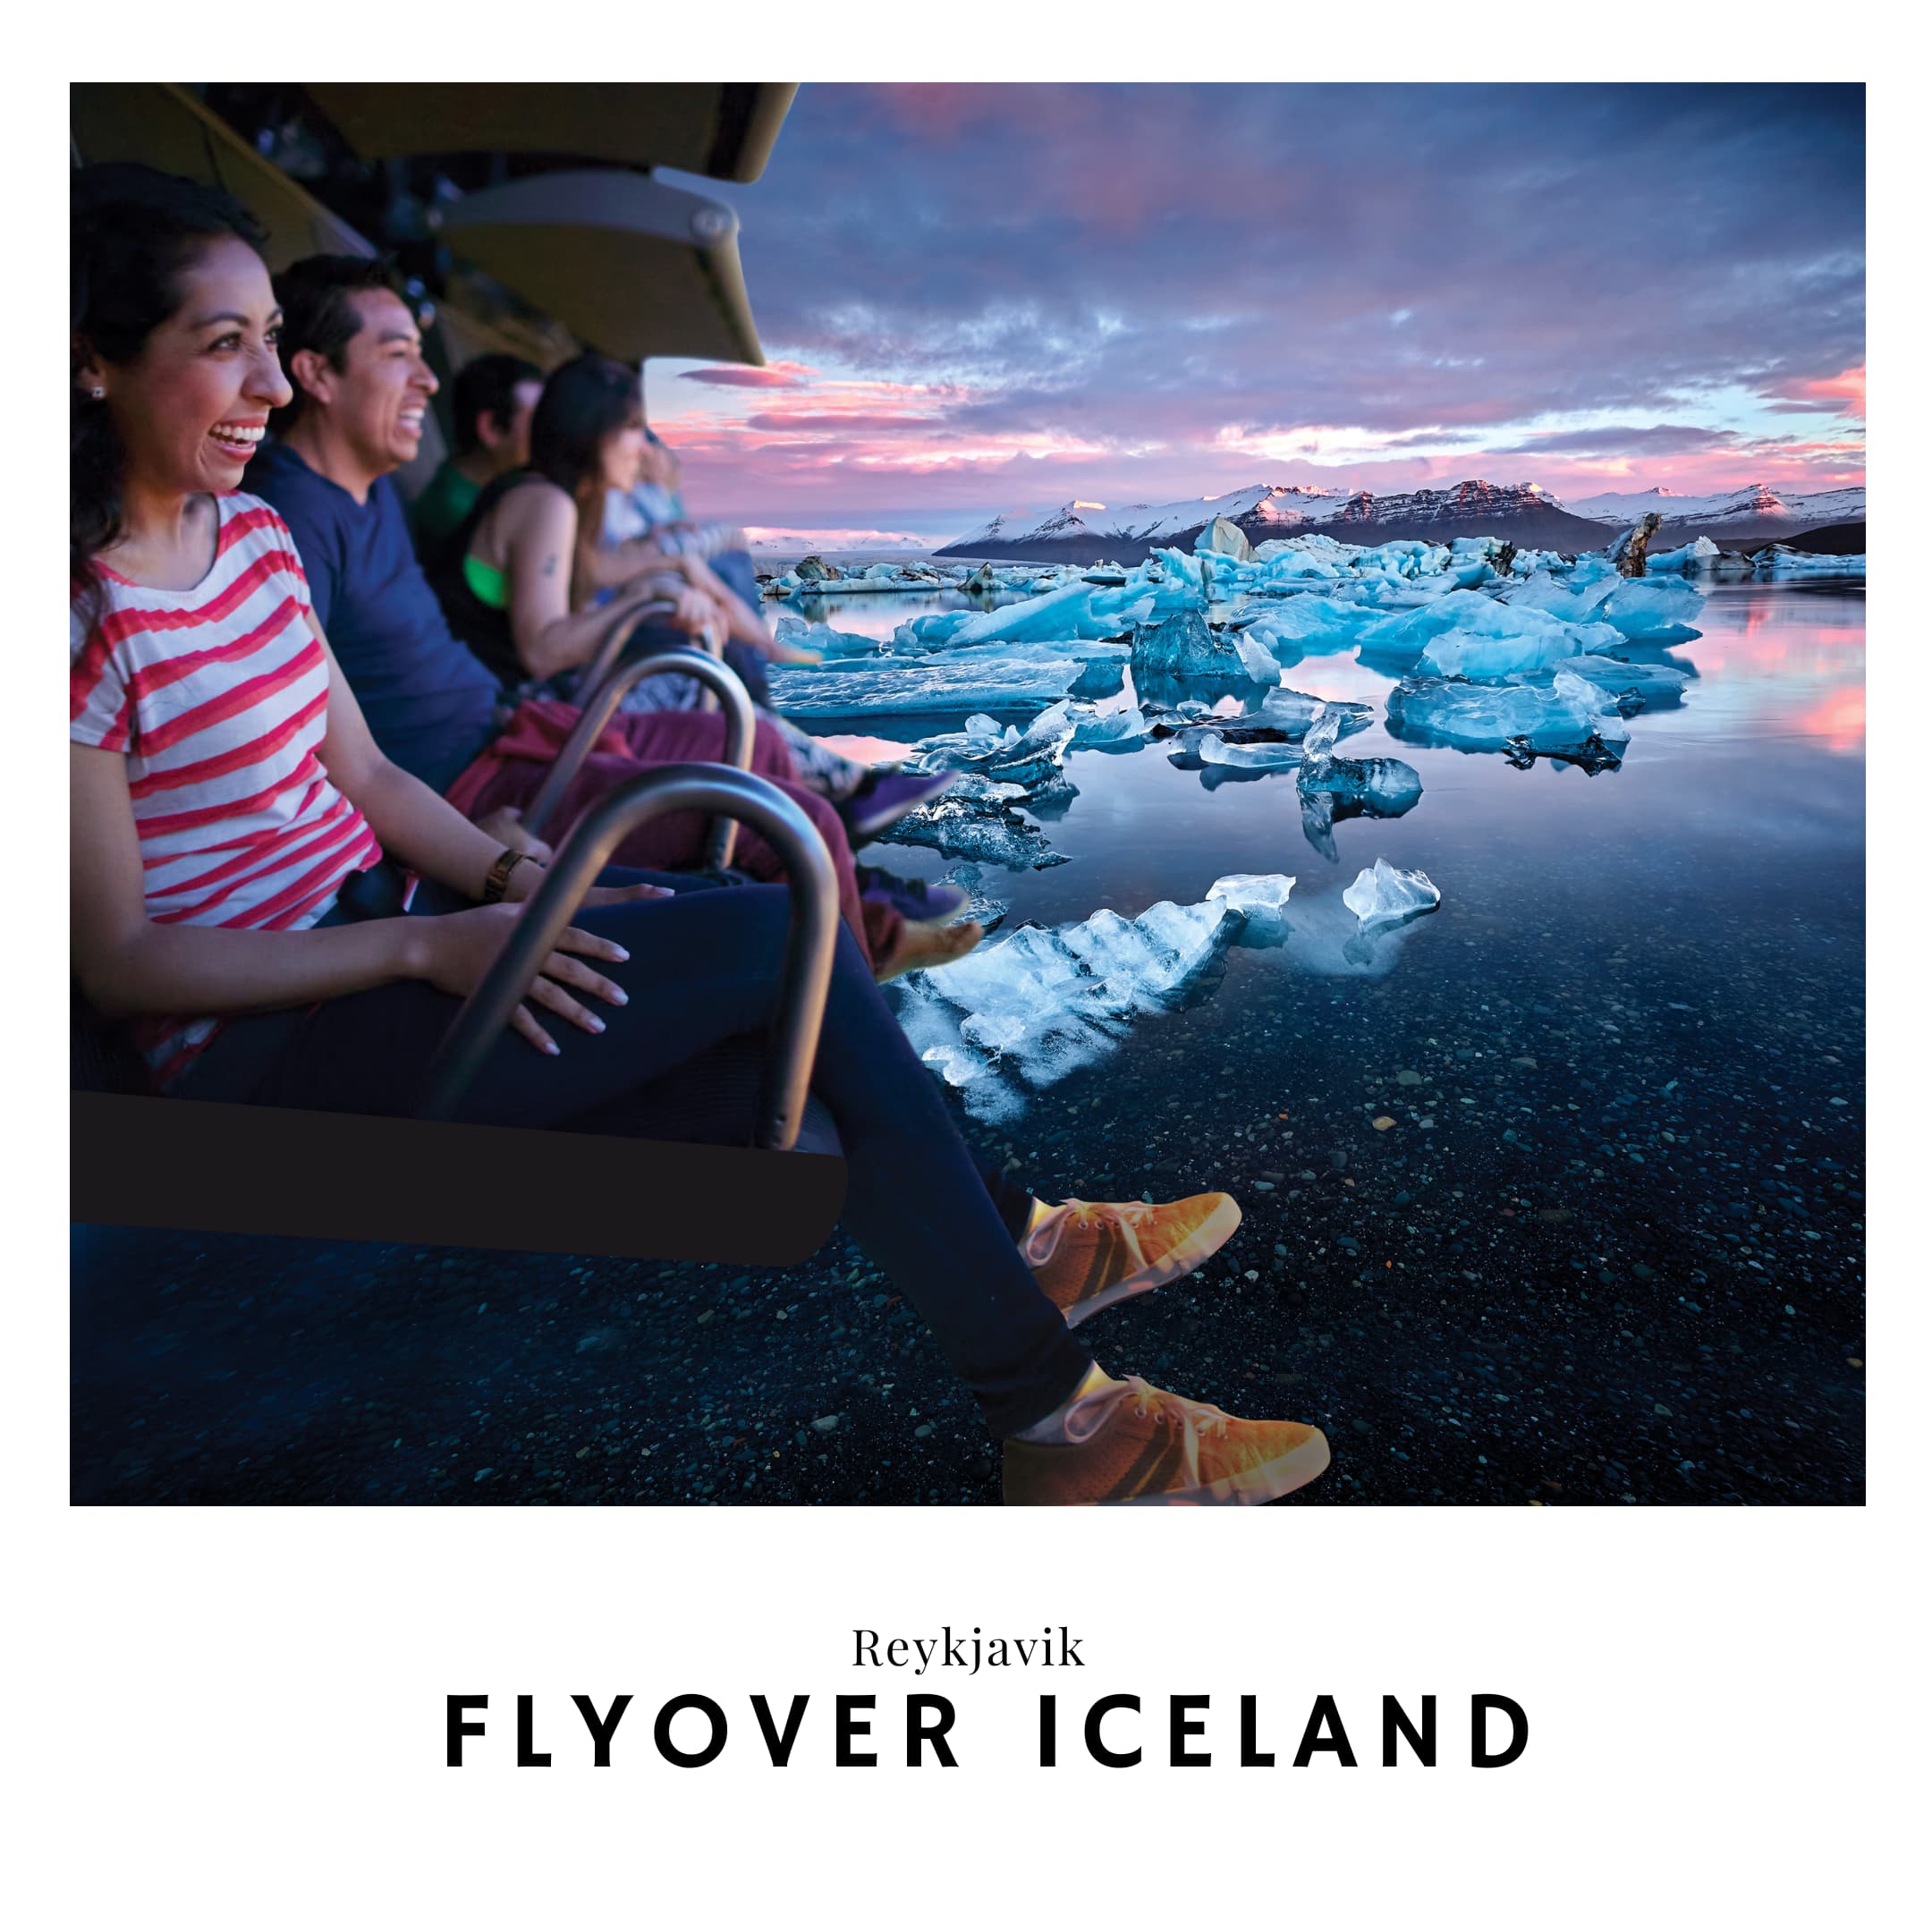 Link to the FlyOver Iceland Travel Guide in Reykjavik